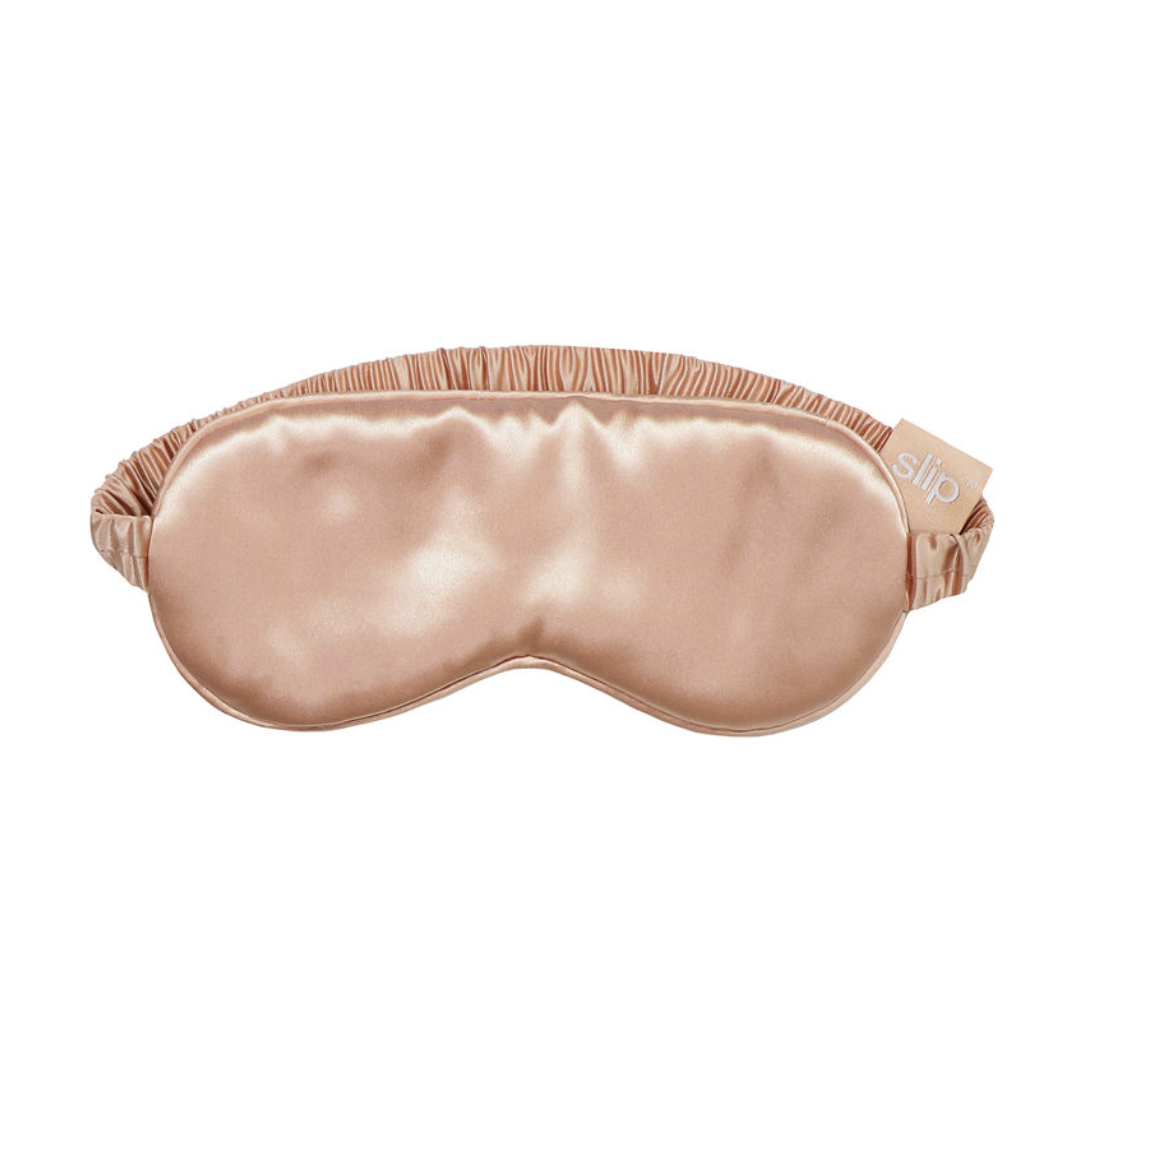 Neiman Marcus, Slip Pure Silk Sleep Mask, Rose Gold